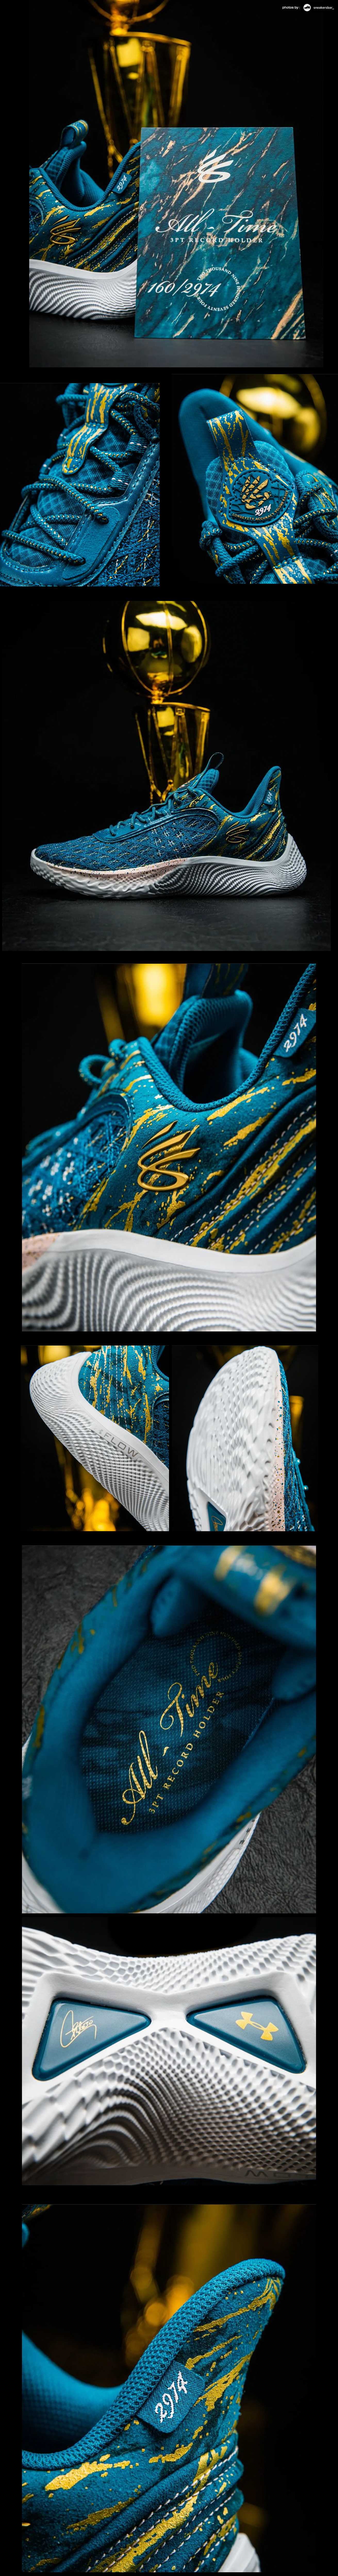 adidas basketball footwear NBA nft Nike shoes sneakers Sports Design stephen curry